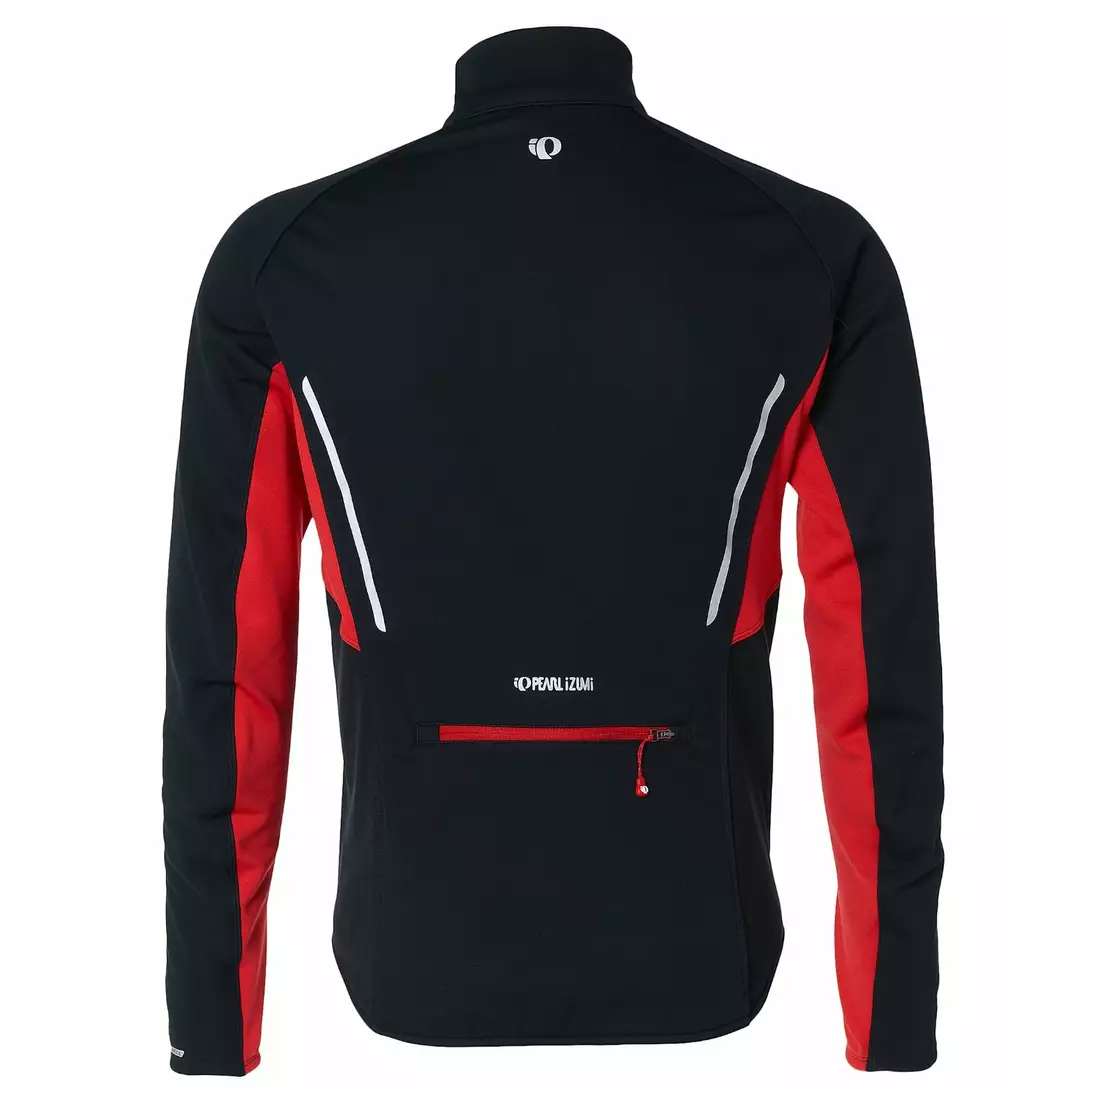 PEARL IZUMI Elite softshell - cycling jacket